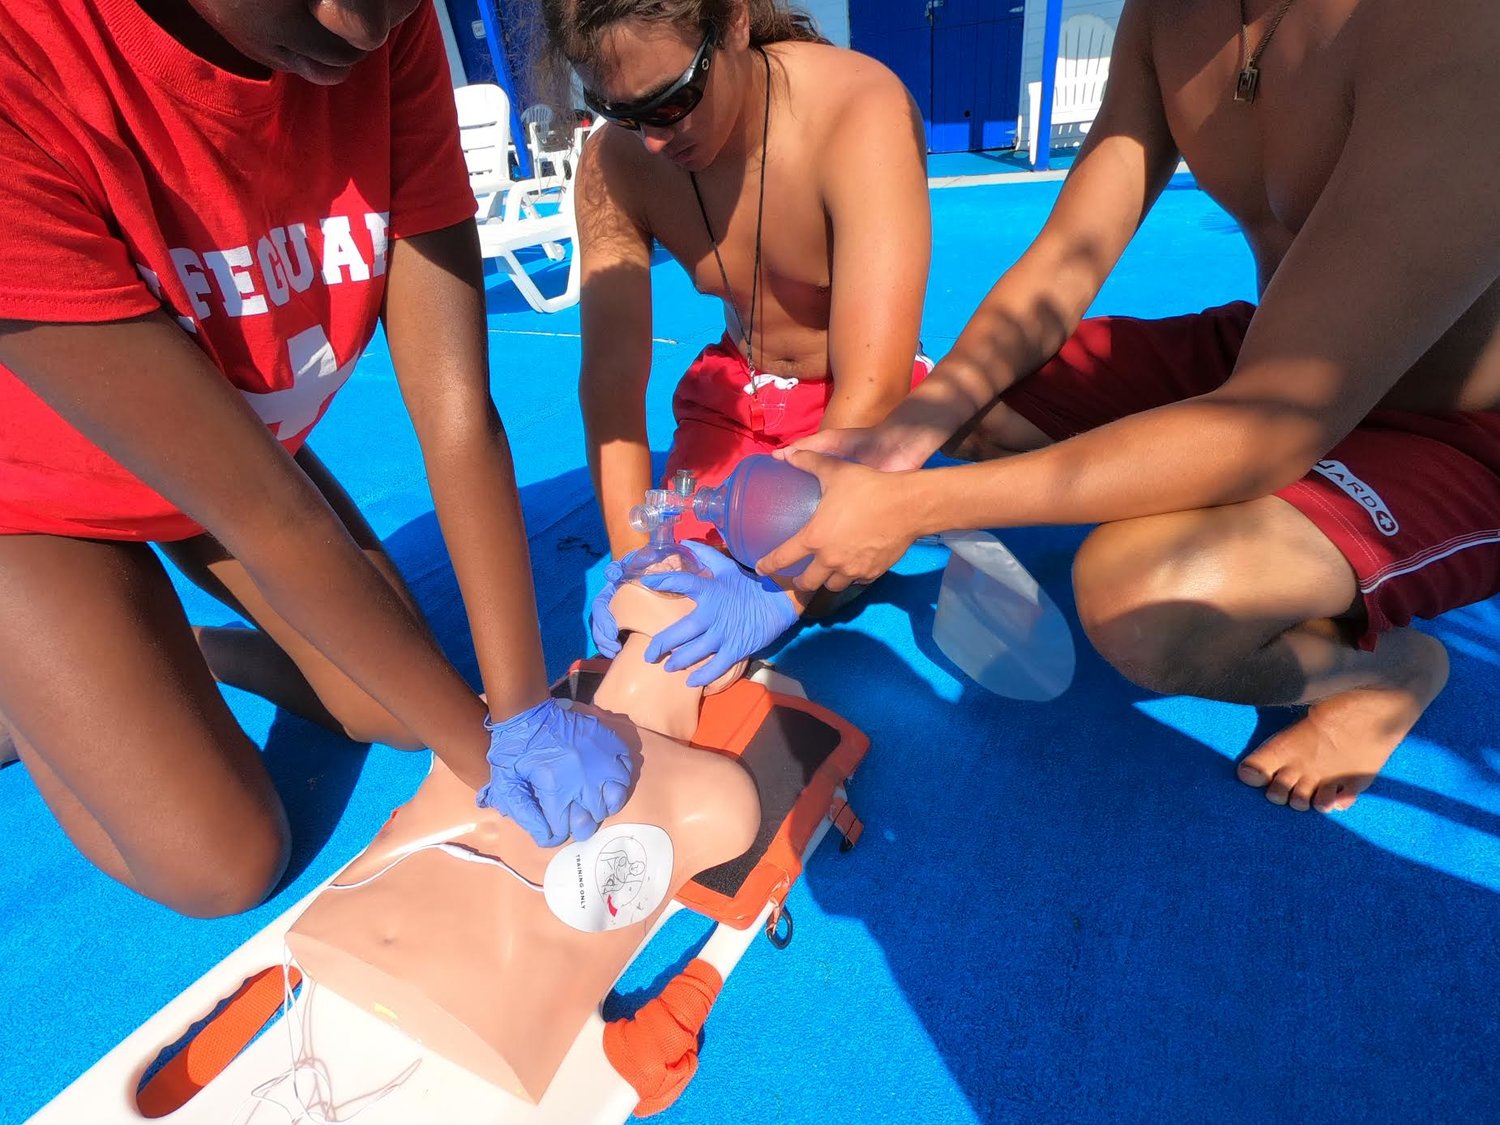 Lifeguard trainees learn how to administer cardio pulmonary resuscitation at Lifeguard Training NY.